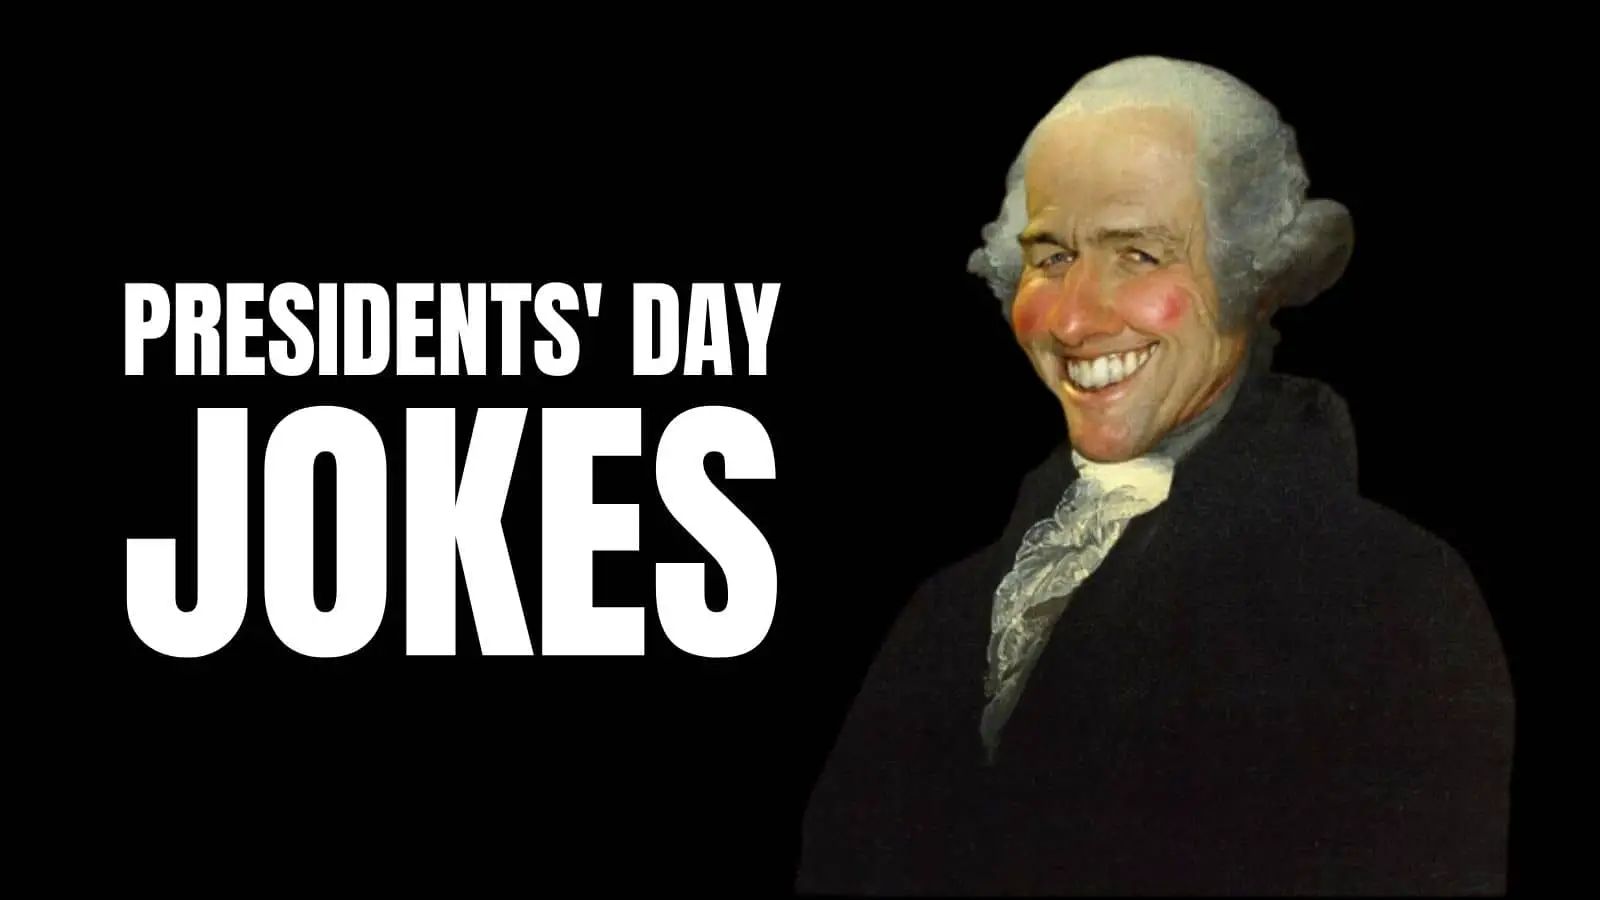 Funny Presidents' Day Jokes on George Washington